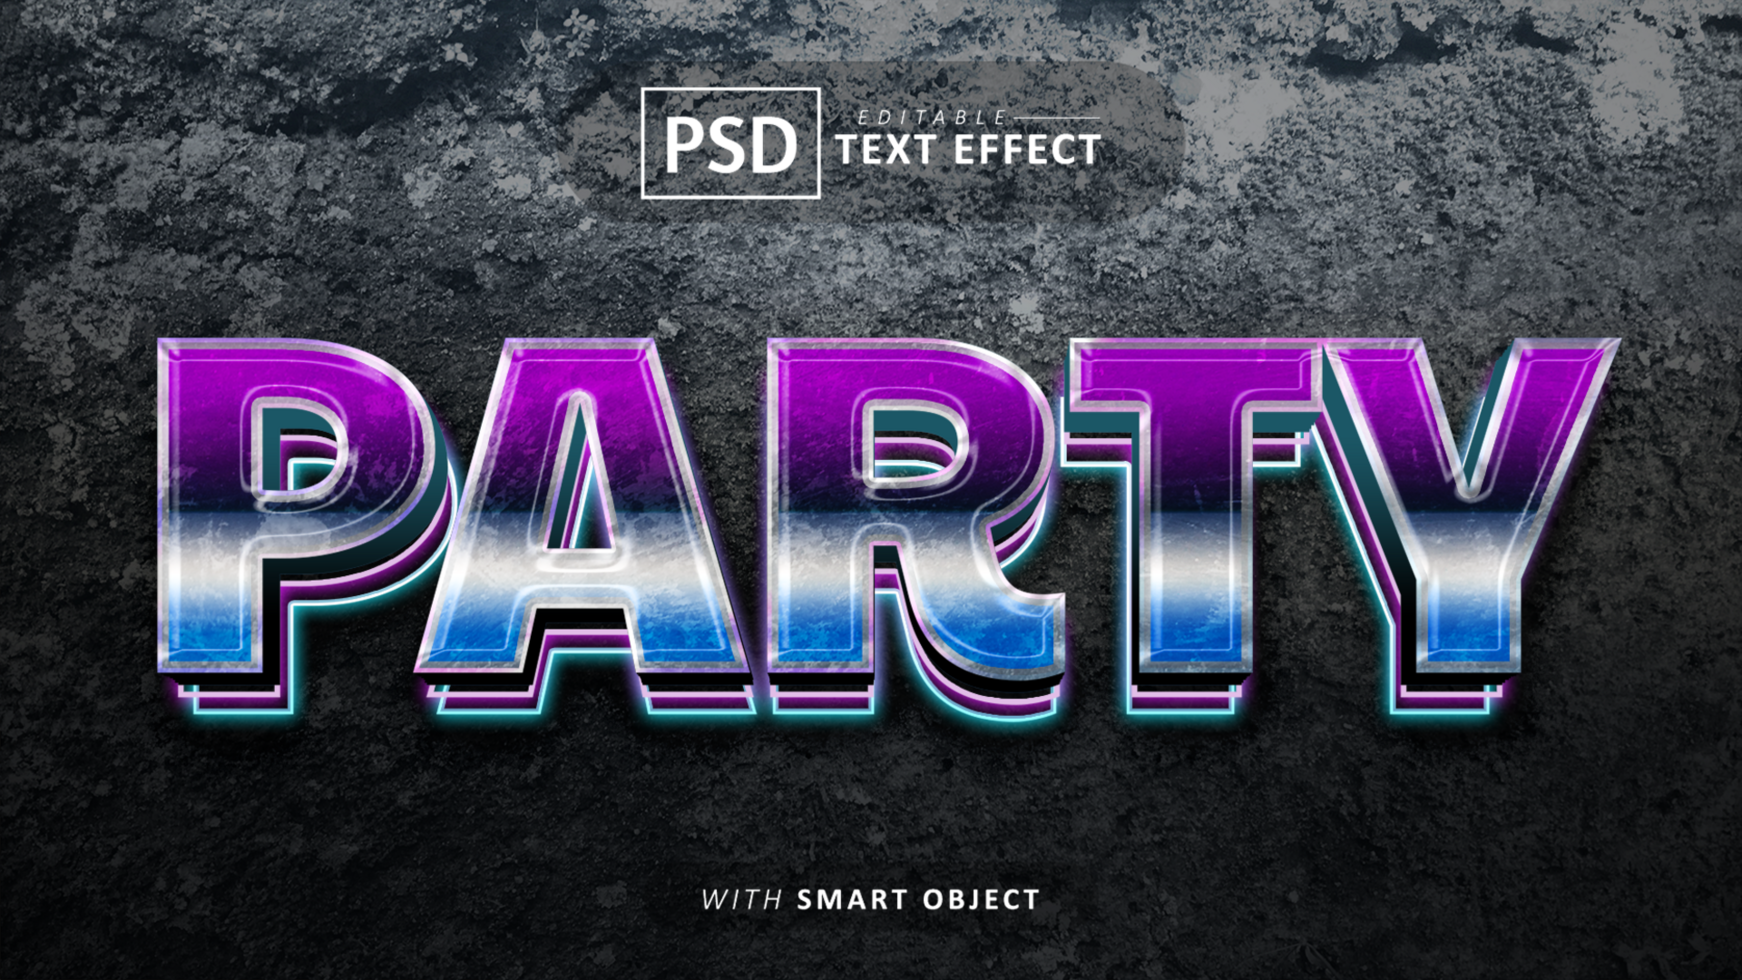 Party 3d text effect editable psd